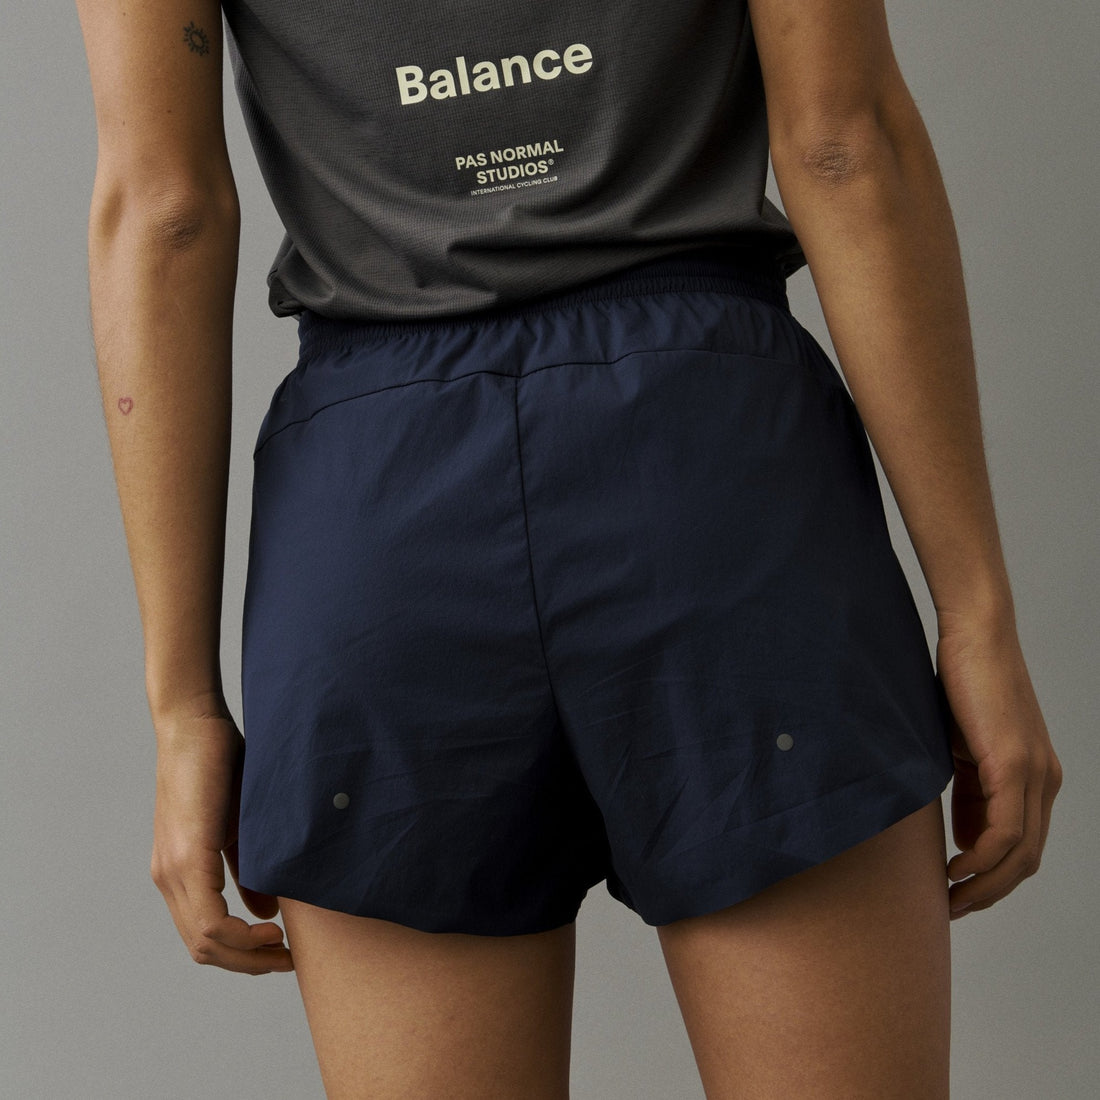 Pas Normal Studios Womens Balance Shorts - Navy